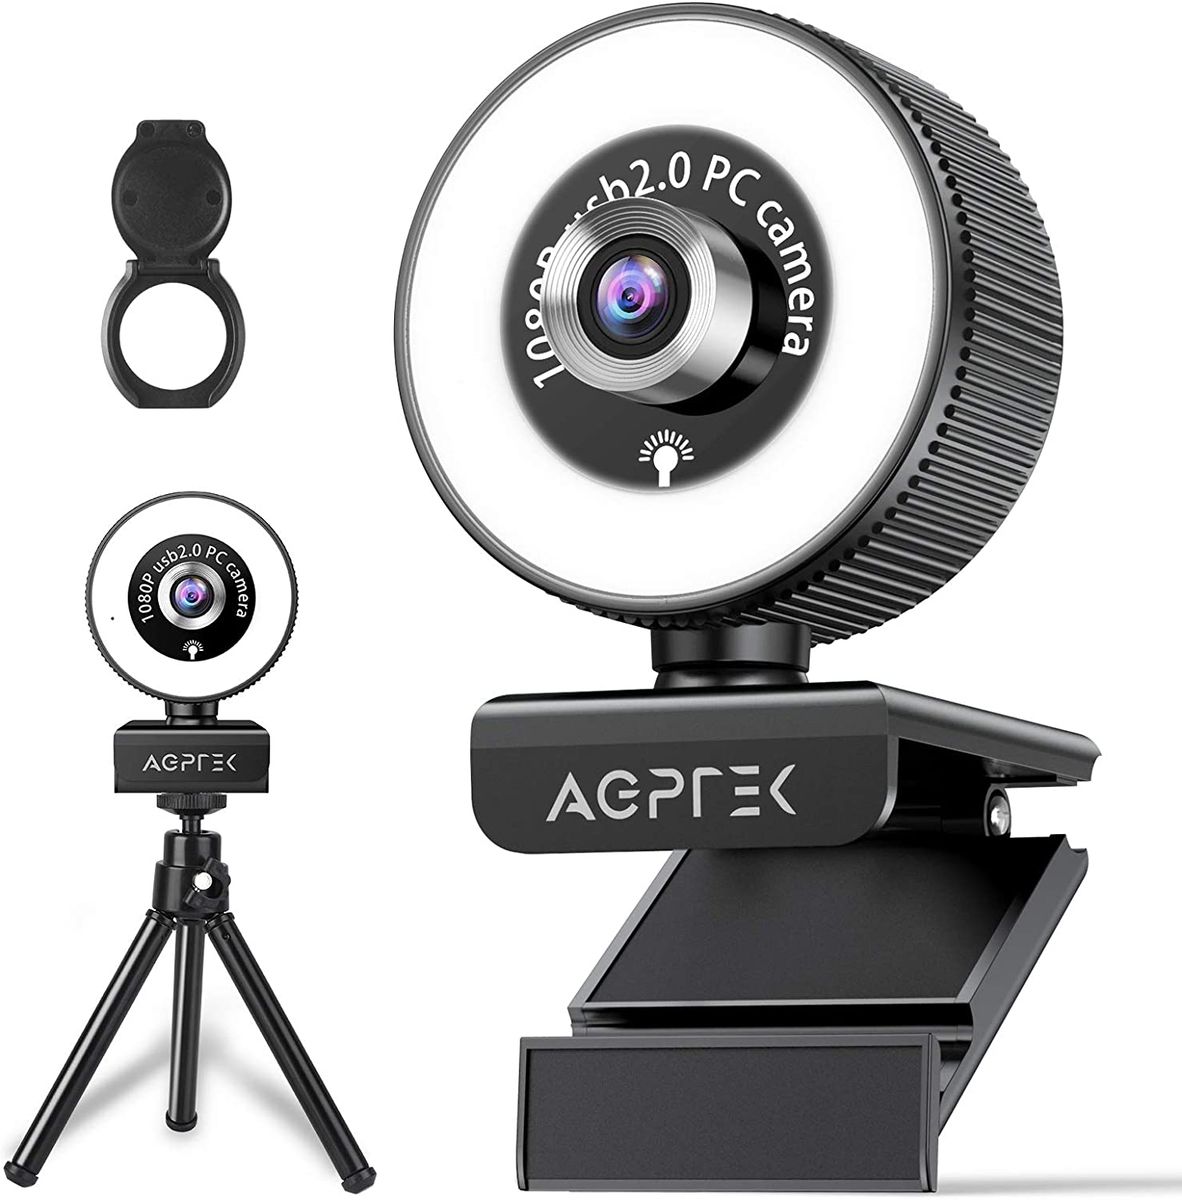 AGPTEK Webcam, 1080P Full HD,Stereo Mikrofon, 360° Drehung,95° Blickfeld, Ringlicht, Abdeckung, Stativ, PC USB Kamera,Facecam für Streaming, Video-Chat, Online-Kurse,Spiel,Kompatibel mit Windows, Mac